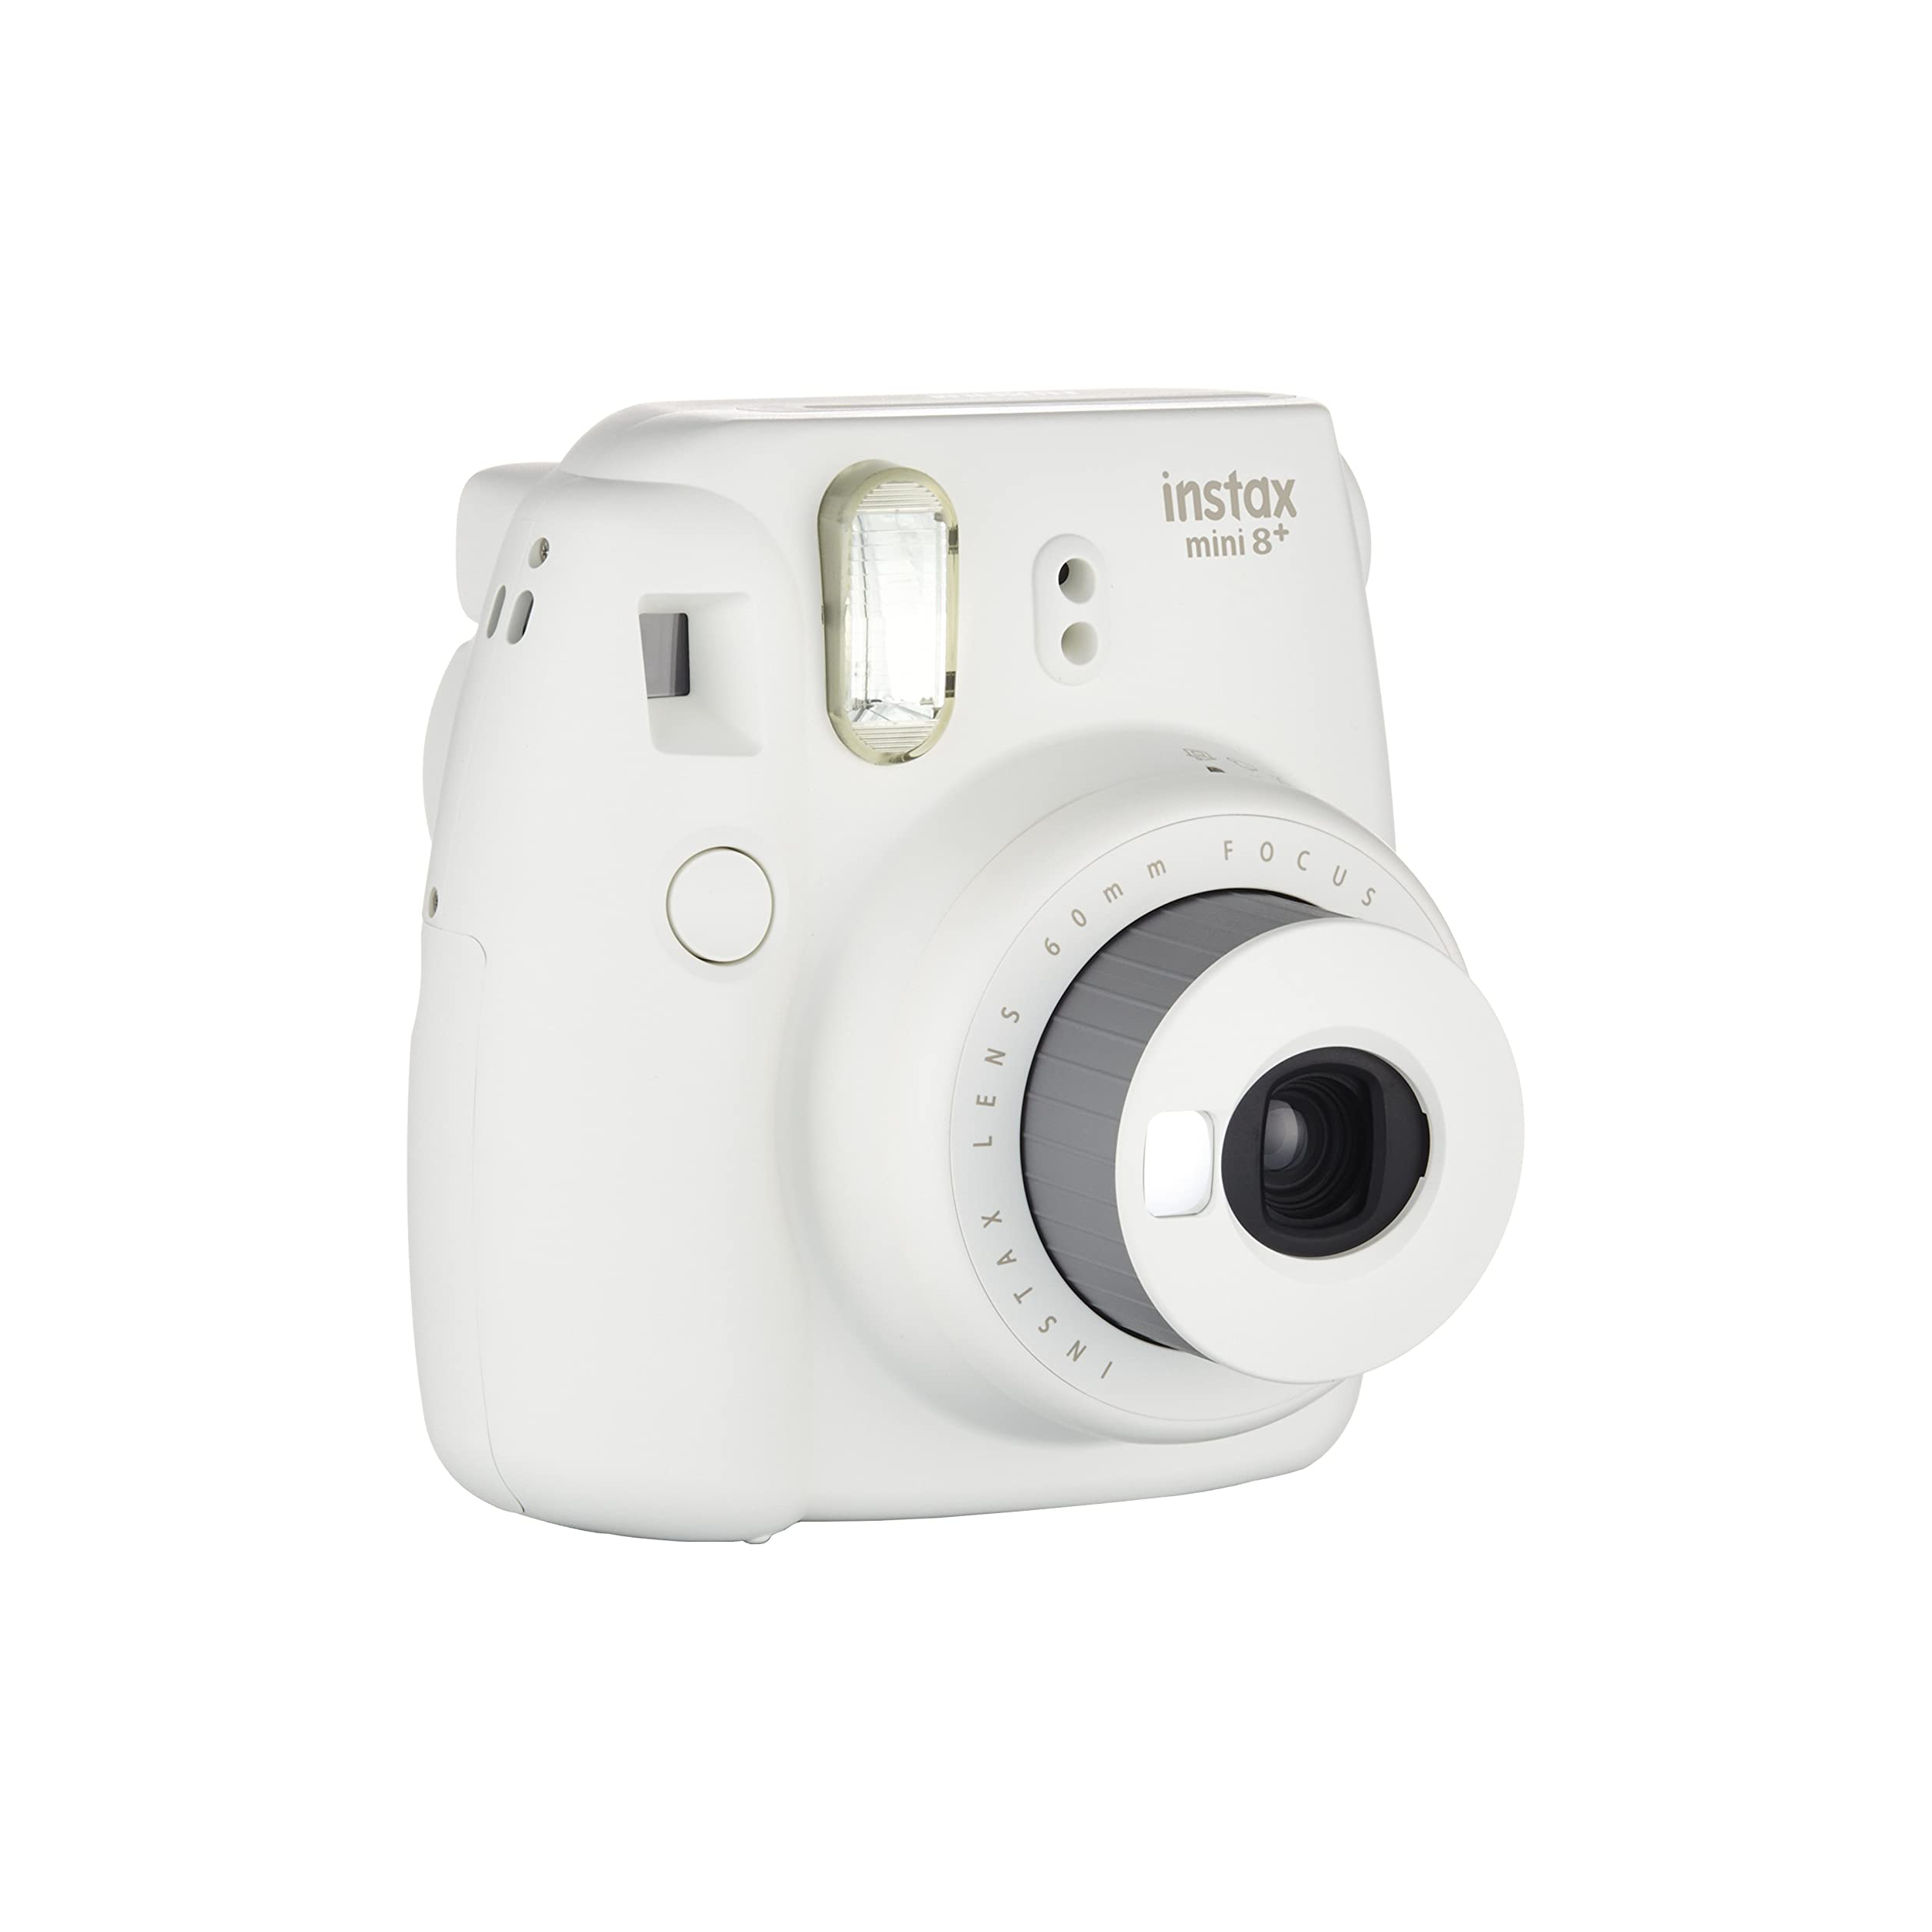 Fujifilm Instax mini 8+ instant camera